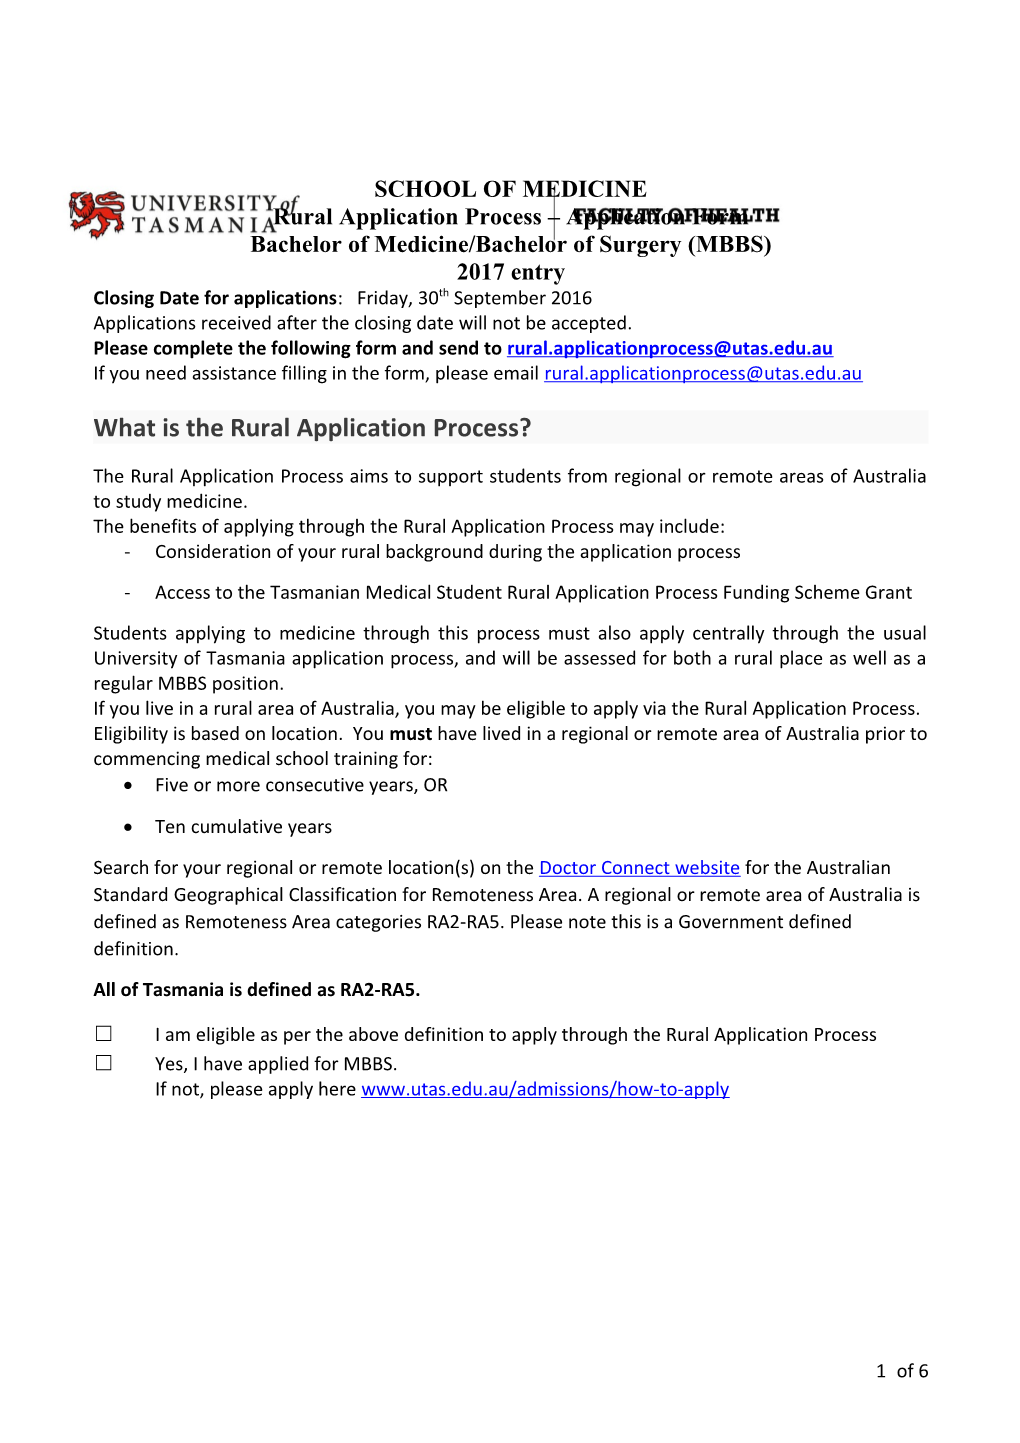 Rural Application Process Application Form